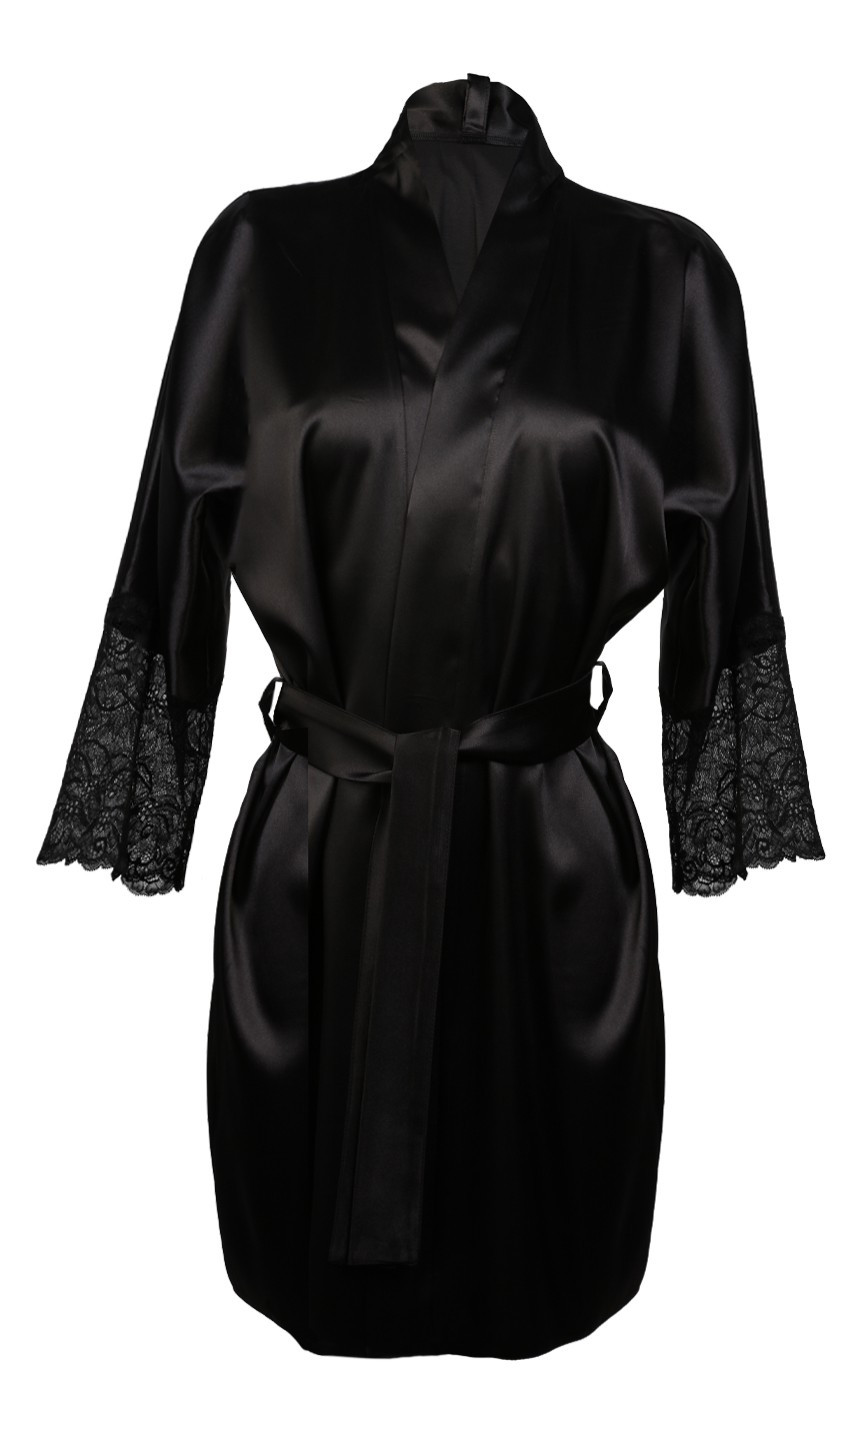 Dámský župan Housecoat model 16664236 Black - DKaren Velikost: L, Barva: černá